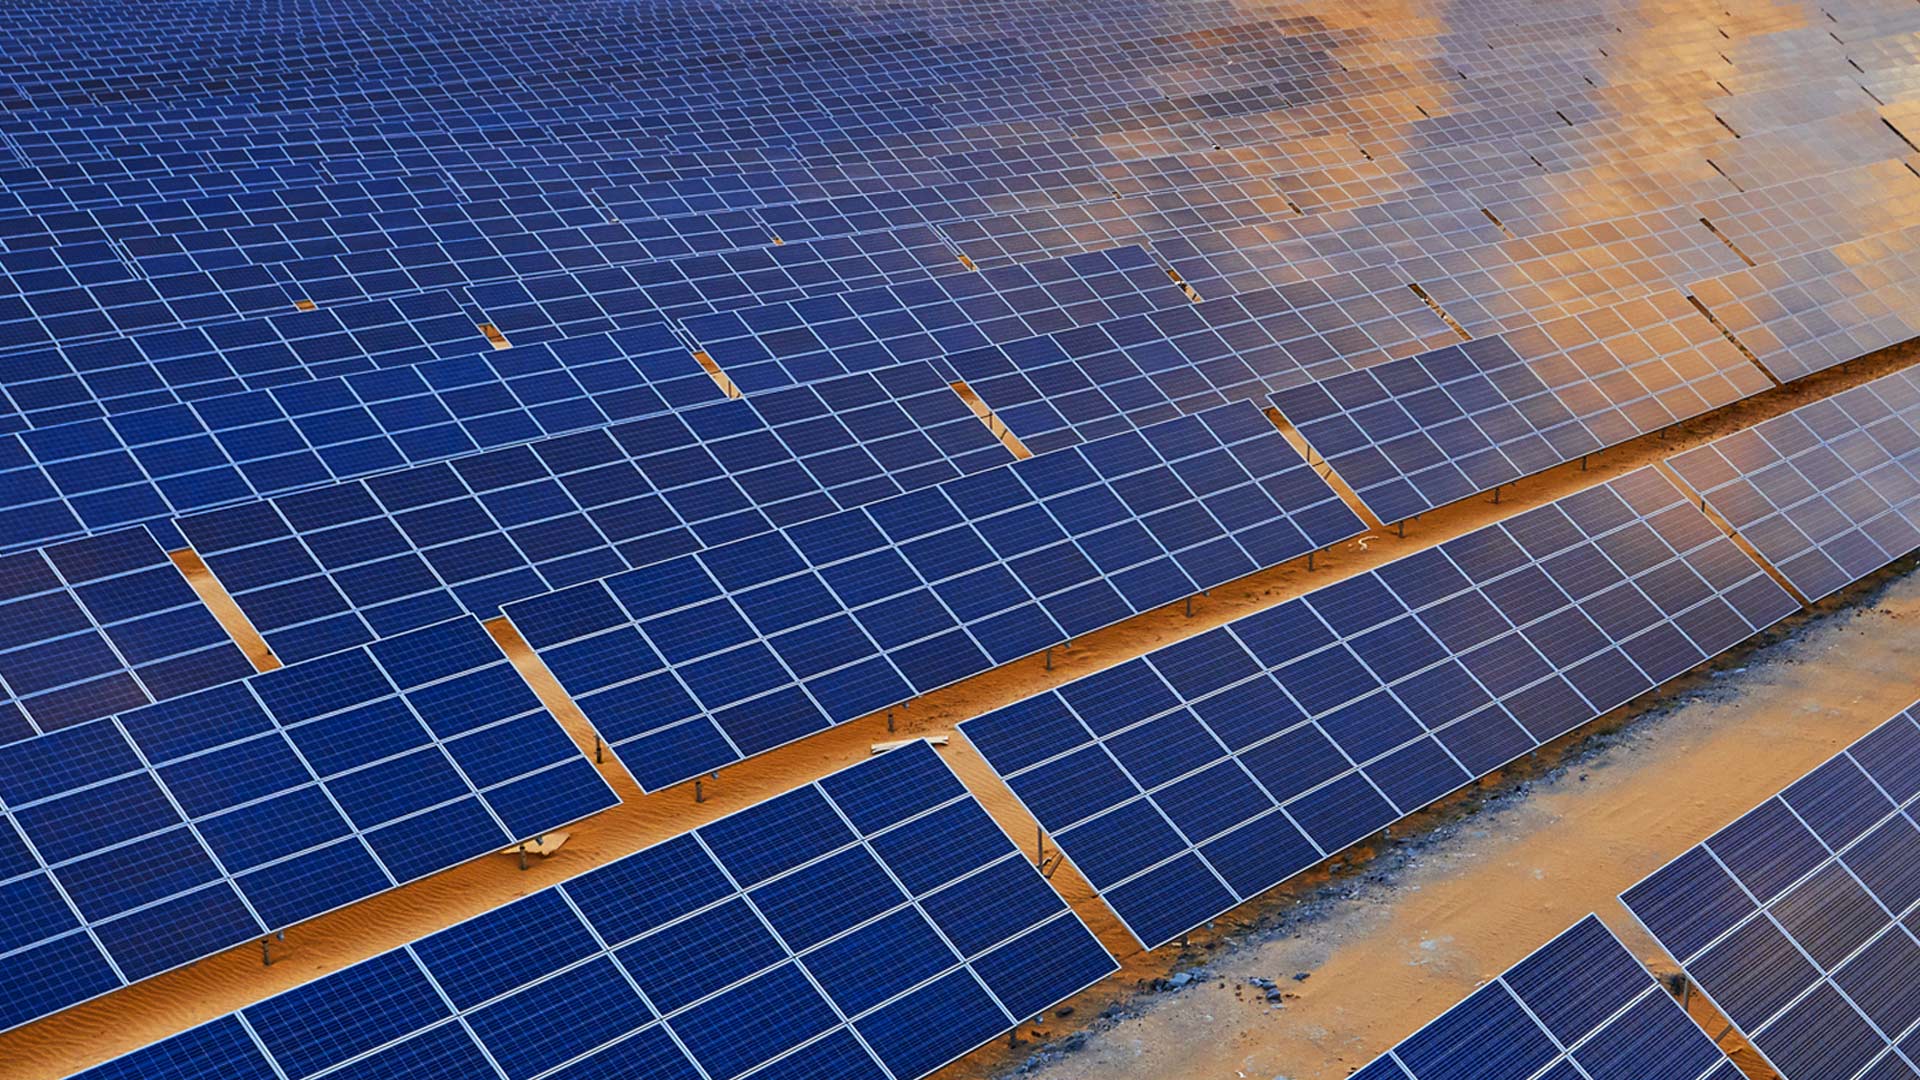 Lāwa’i Solar and Energy Storage Project